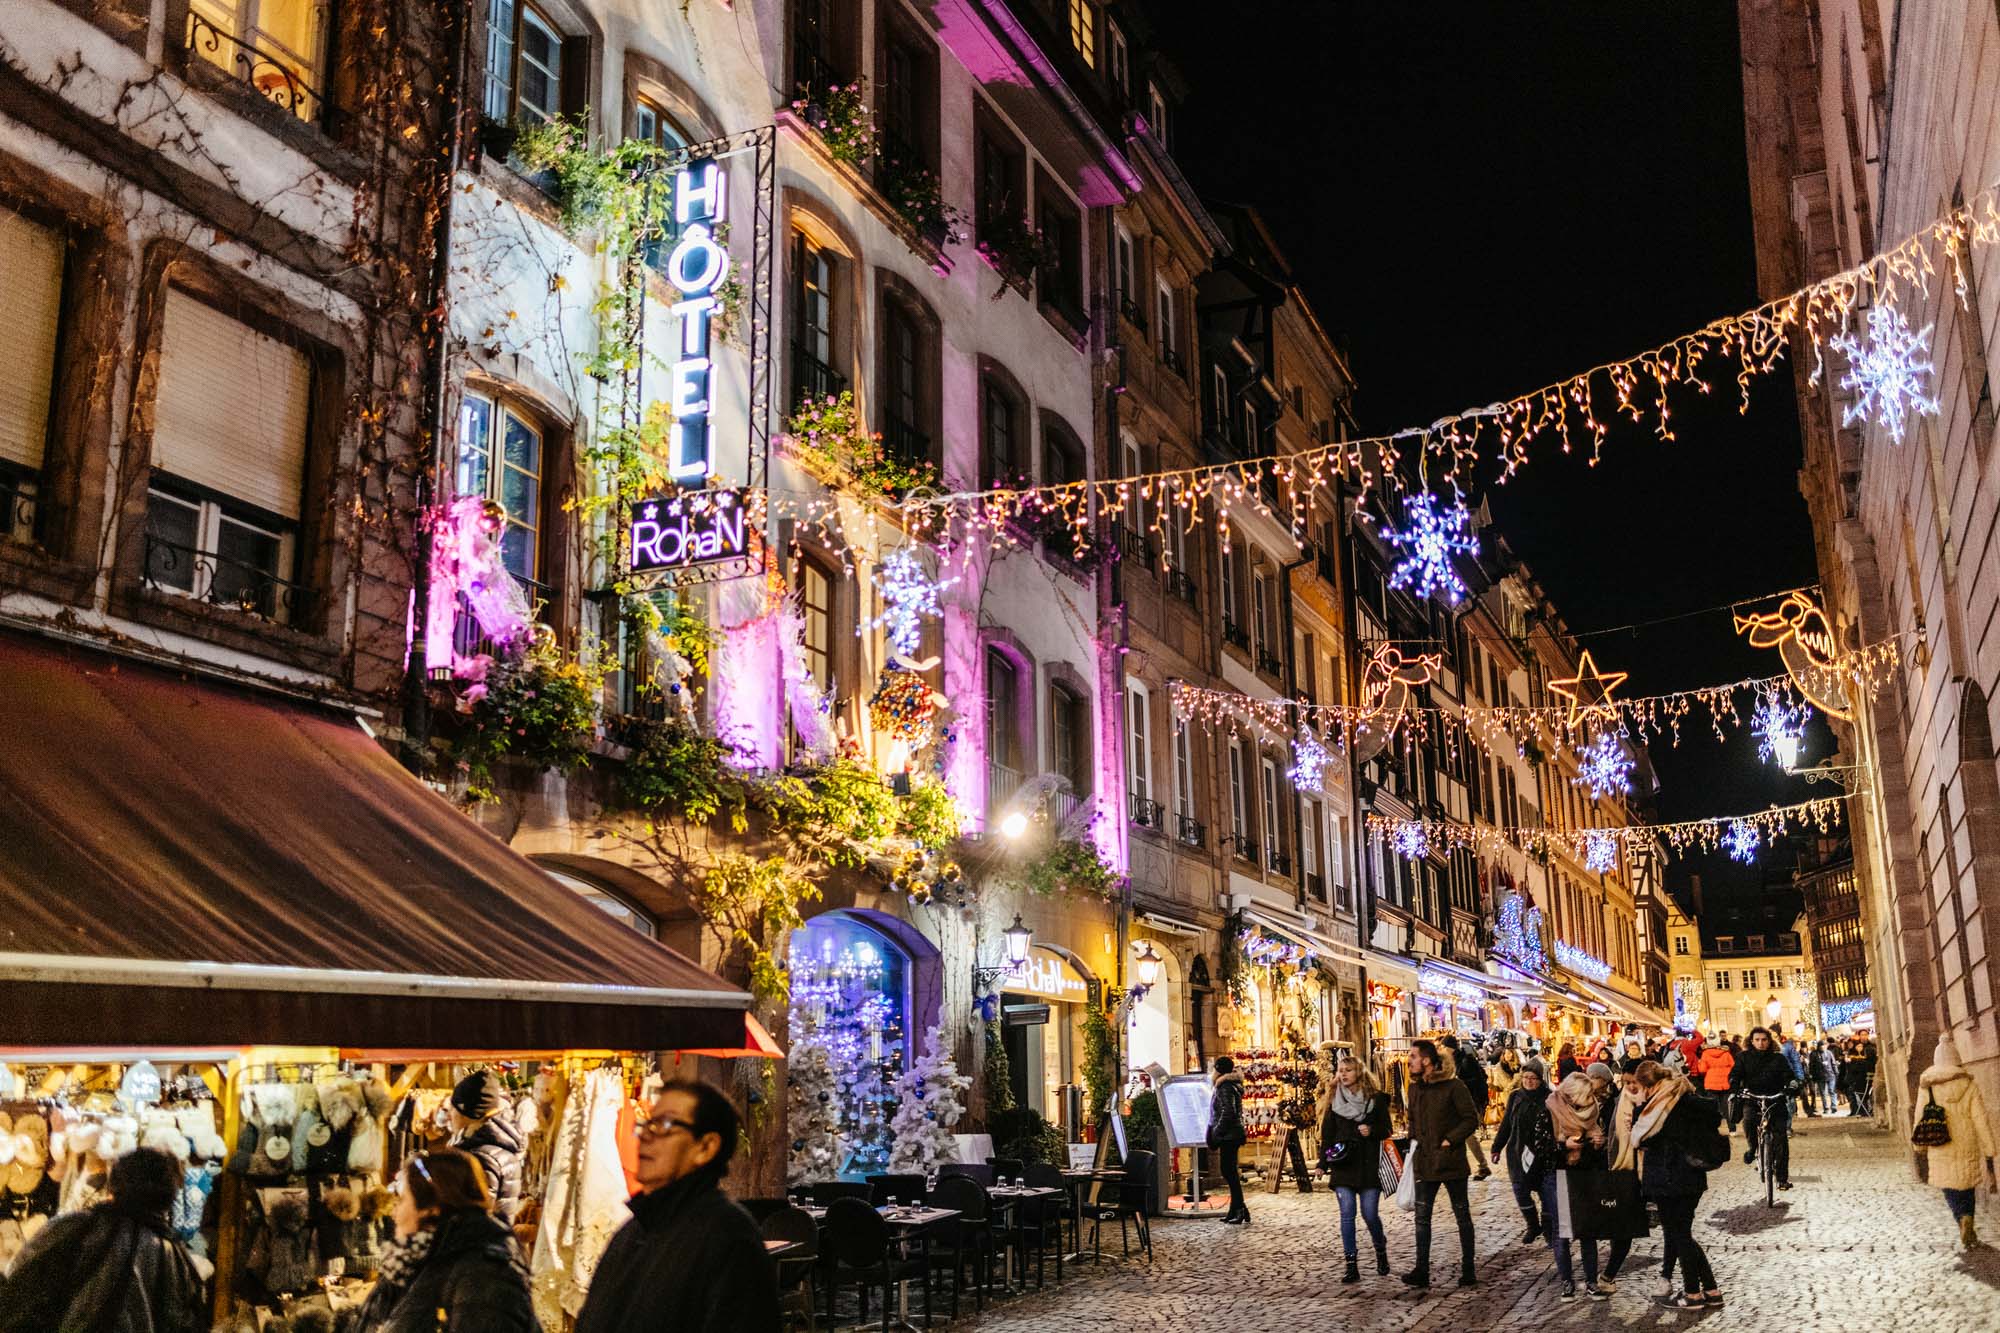 Strasbourg Christmas street market at night via ifeelstock depositphotos.com